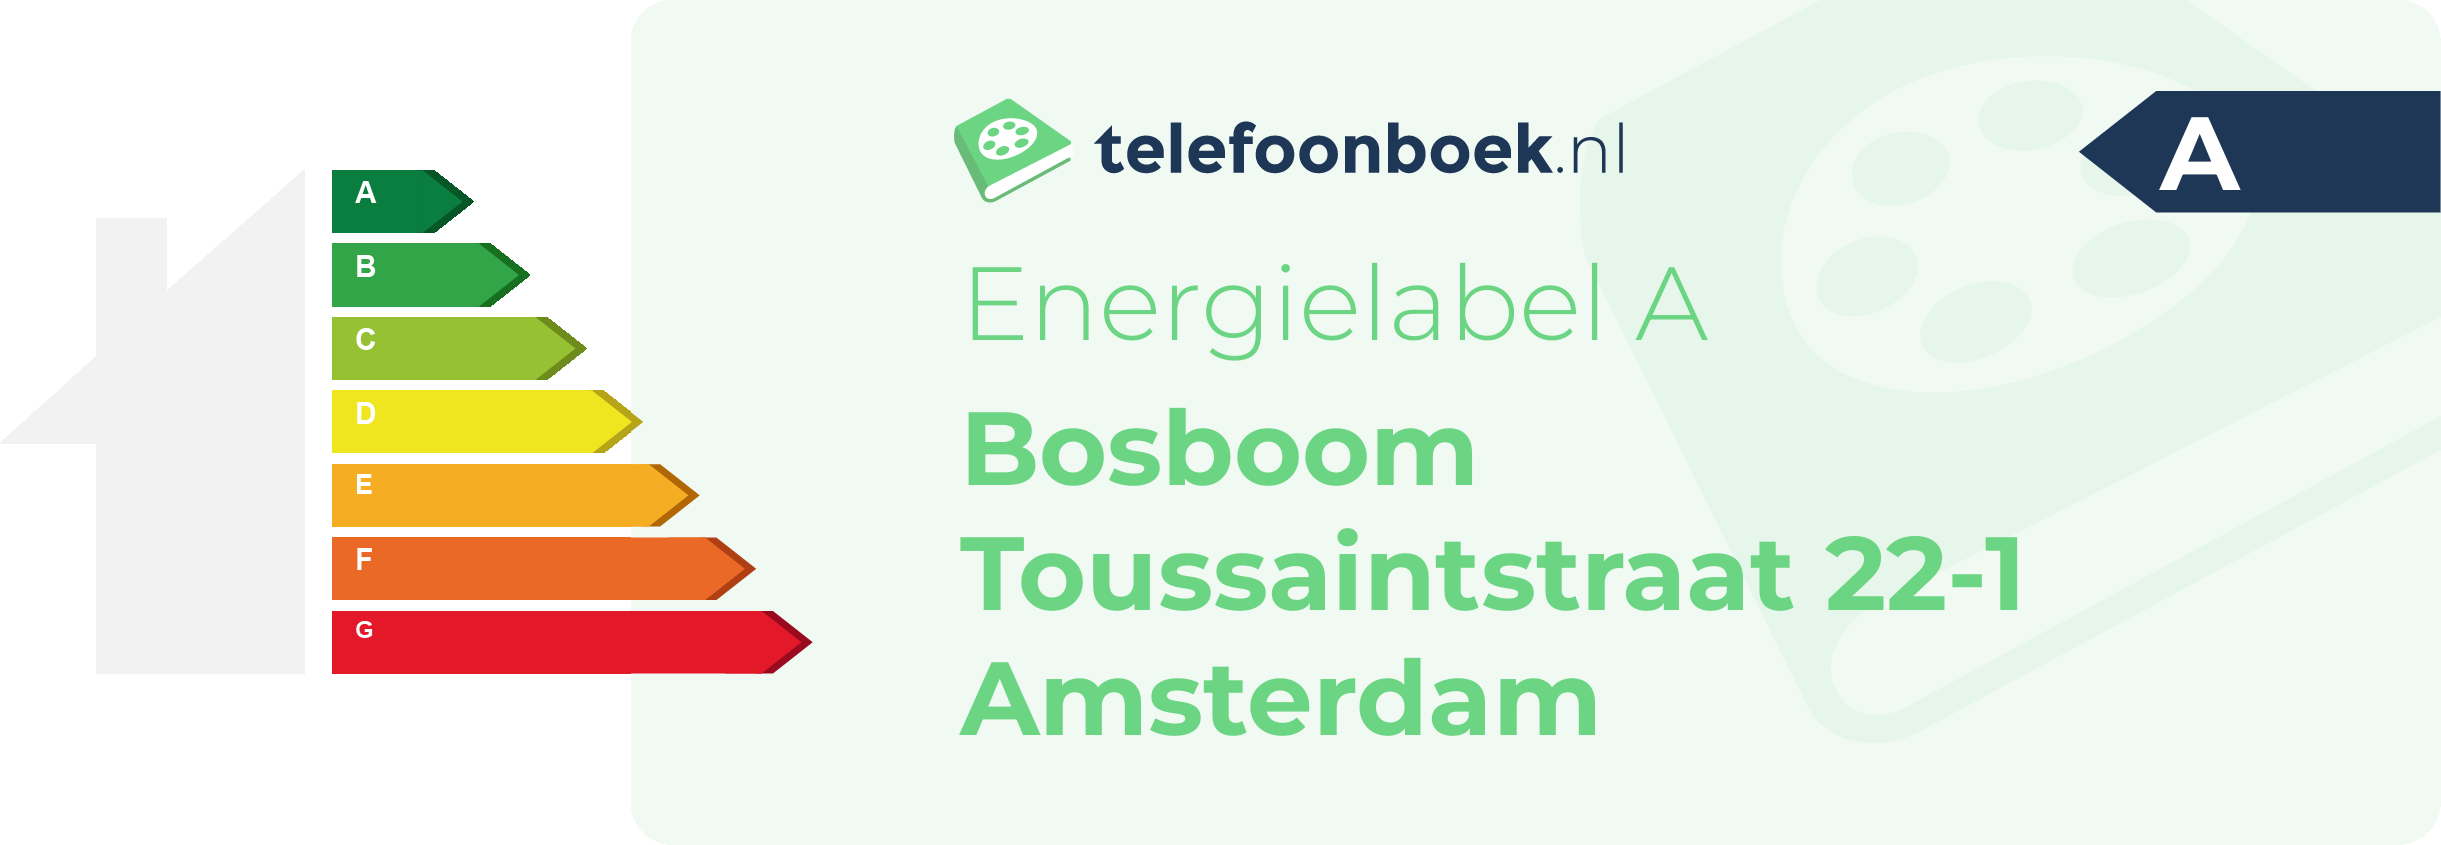 Energielabel Bosboom Toussaintstraat 22-1 Amsterdam